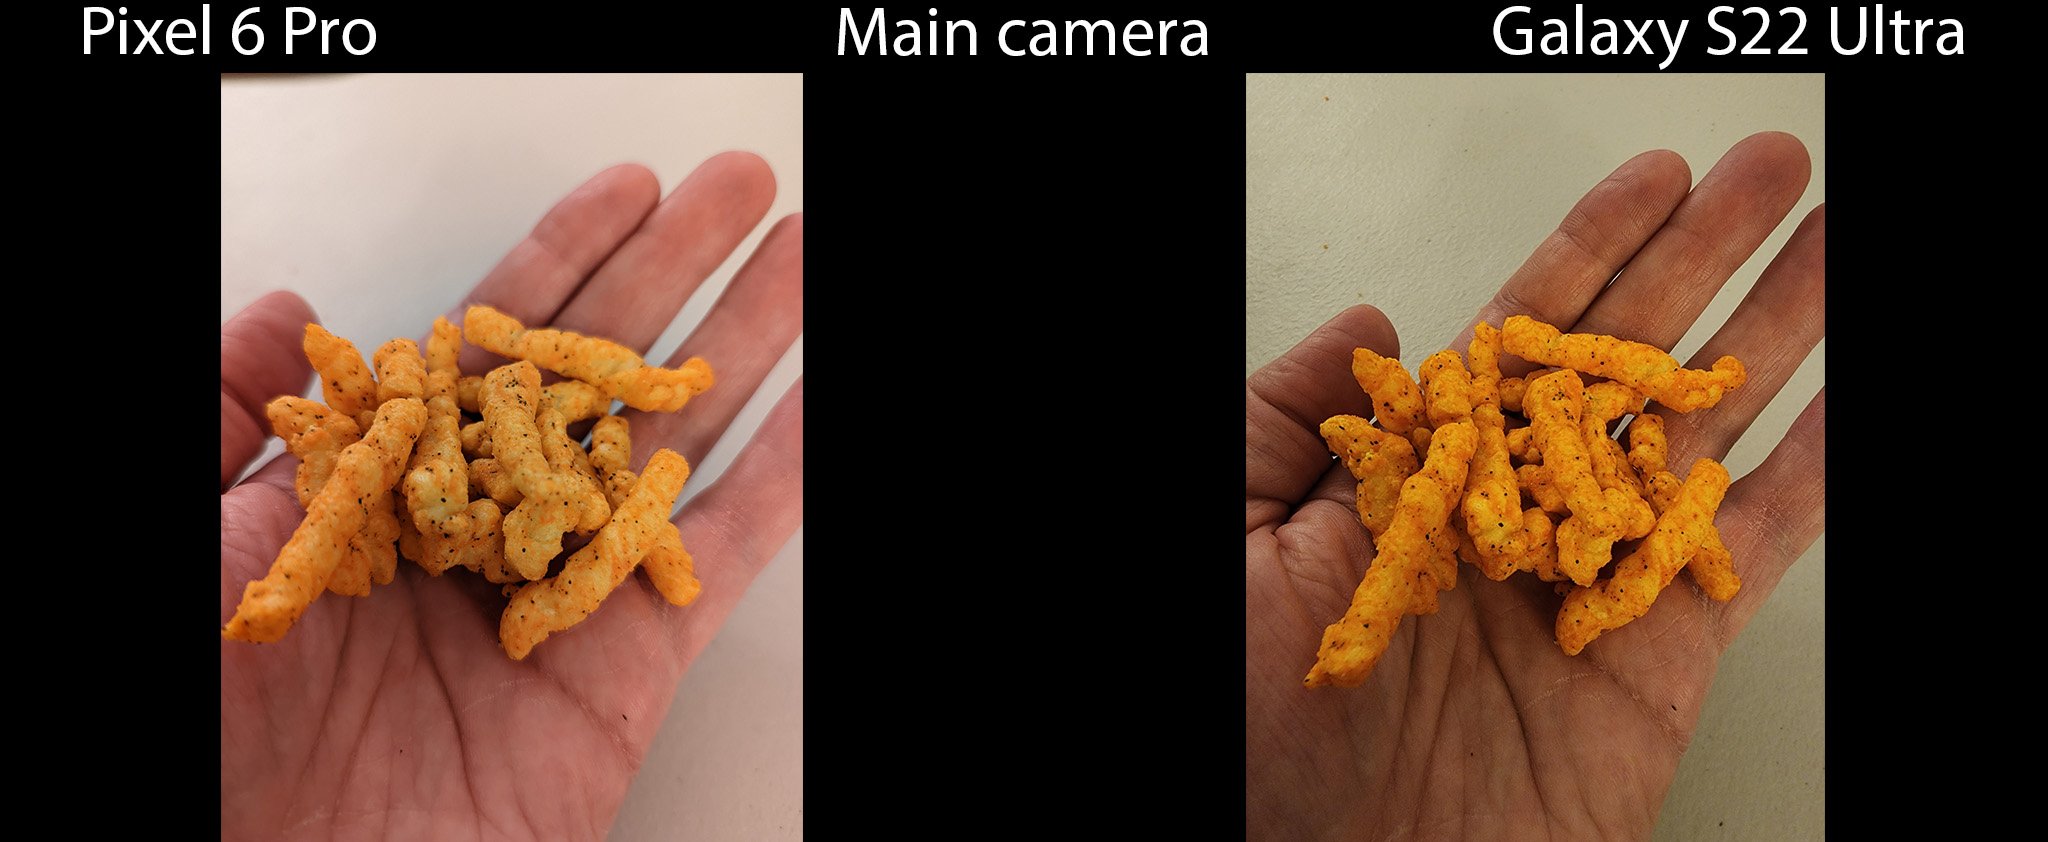 Galaxy S22 Ultra Vs Pixel 6 Pro Lens Distortion Compare